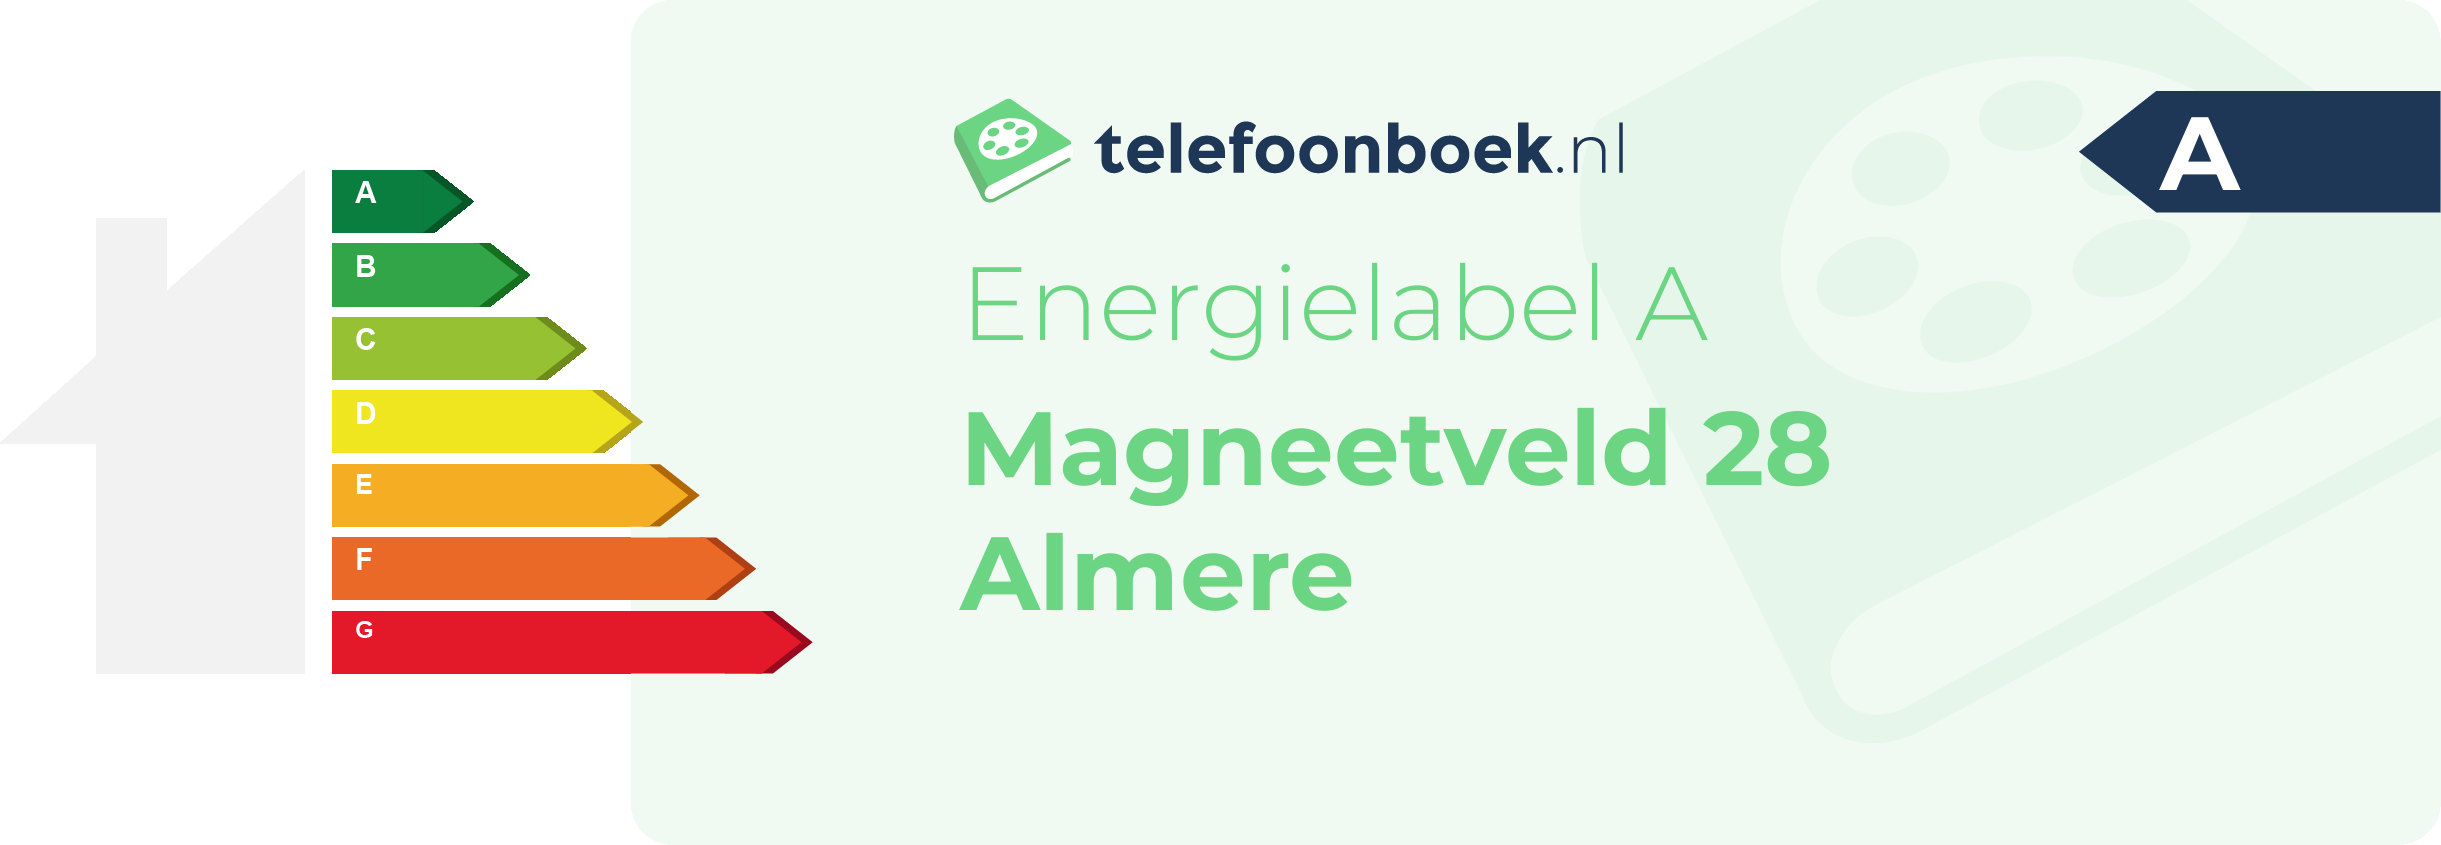 Energielabel Magneetveld 28 Almere